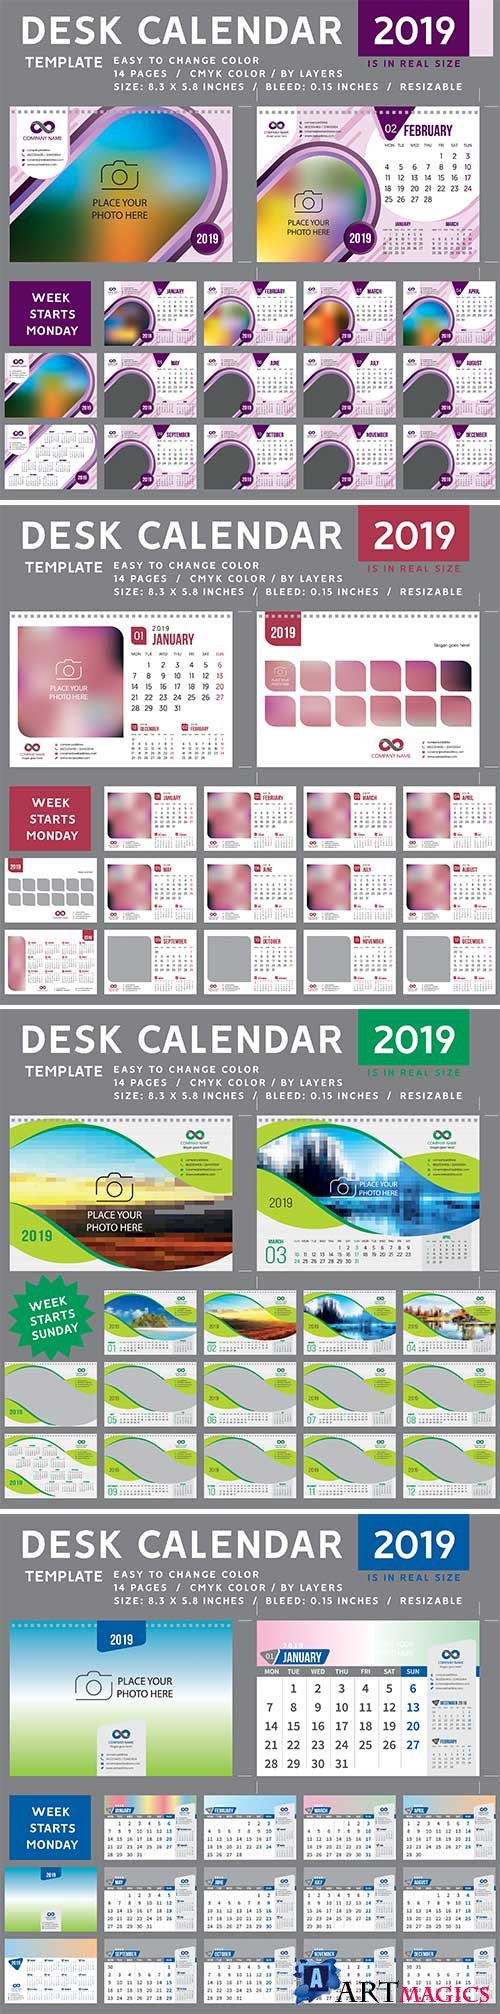 Desk Calendar 2019 vector template, 12 months included # 2